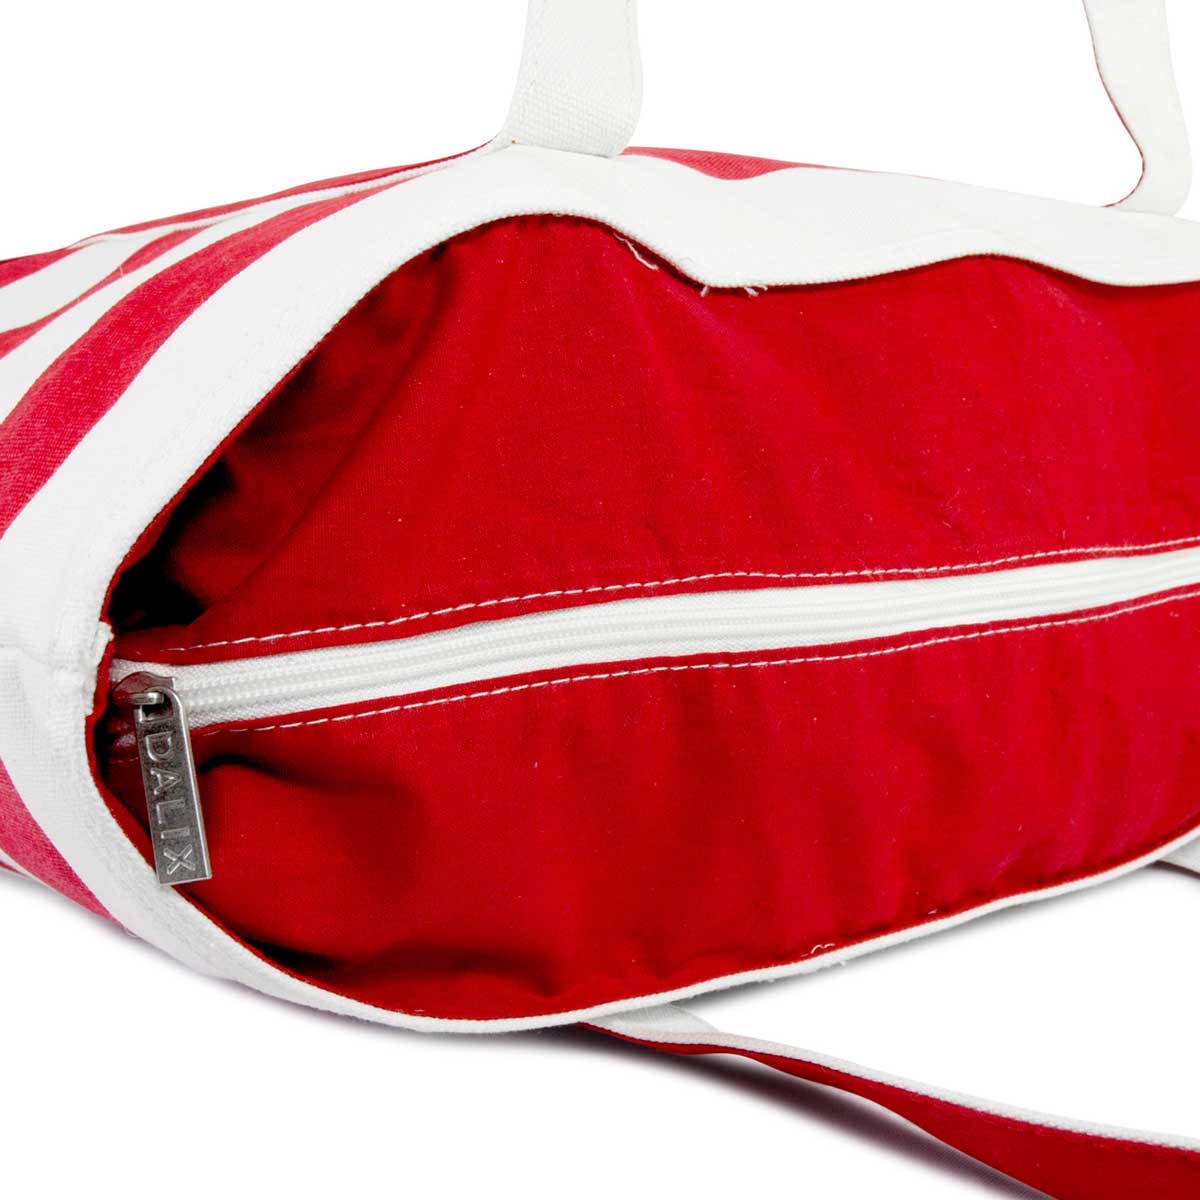 Dalix Beach Tote Bag Shoulder Bags Striped Monogrammed Red Ballent Letter A-Z